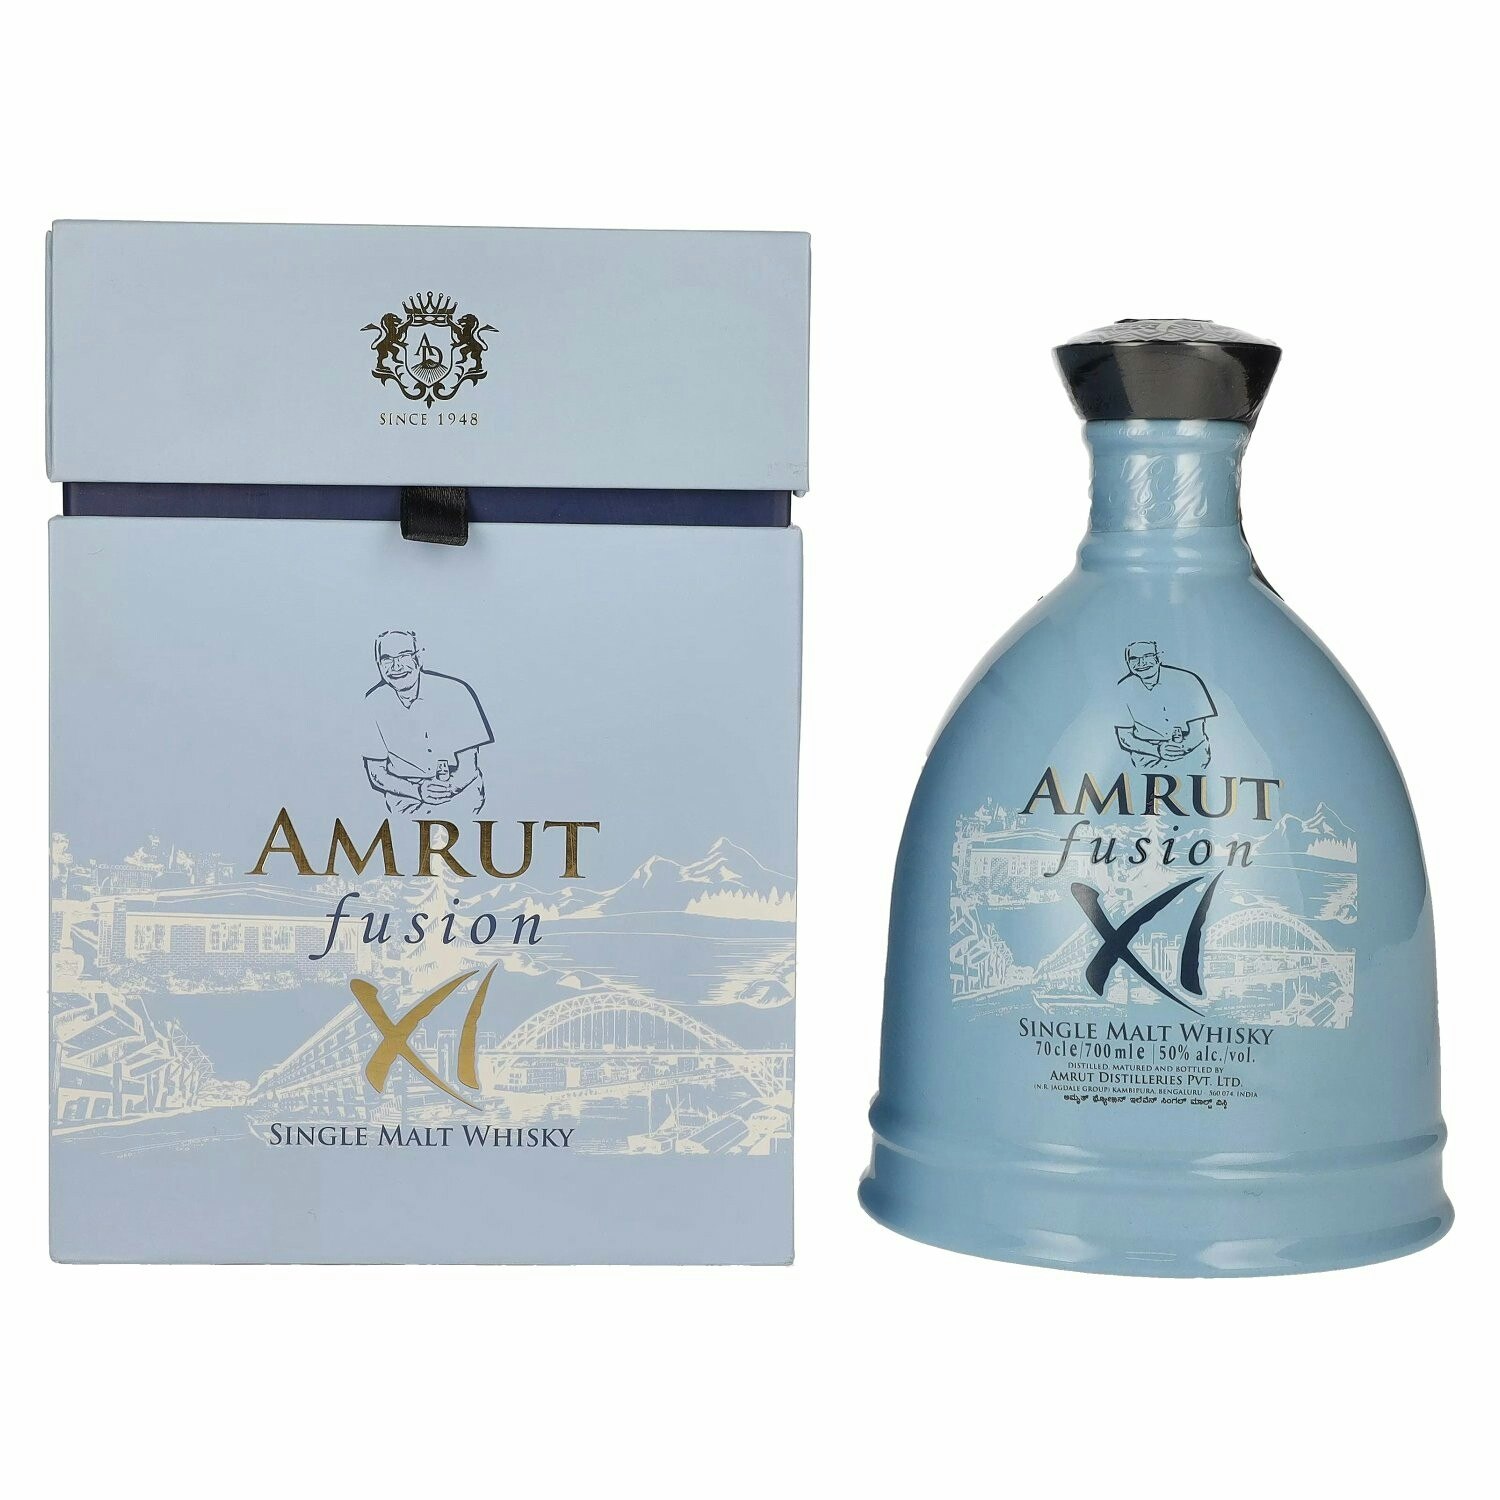 Amrut FUSION XI Single Malt Whisky 50% Vol. 0,7l in Giftbox